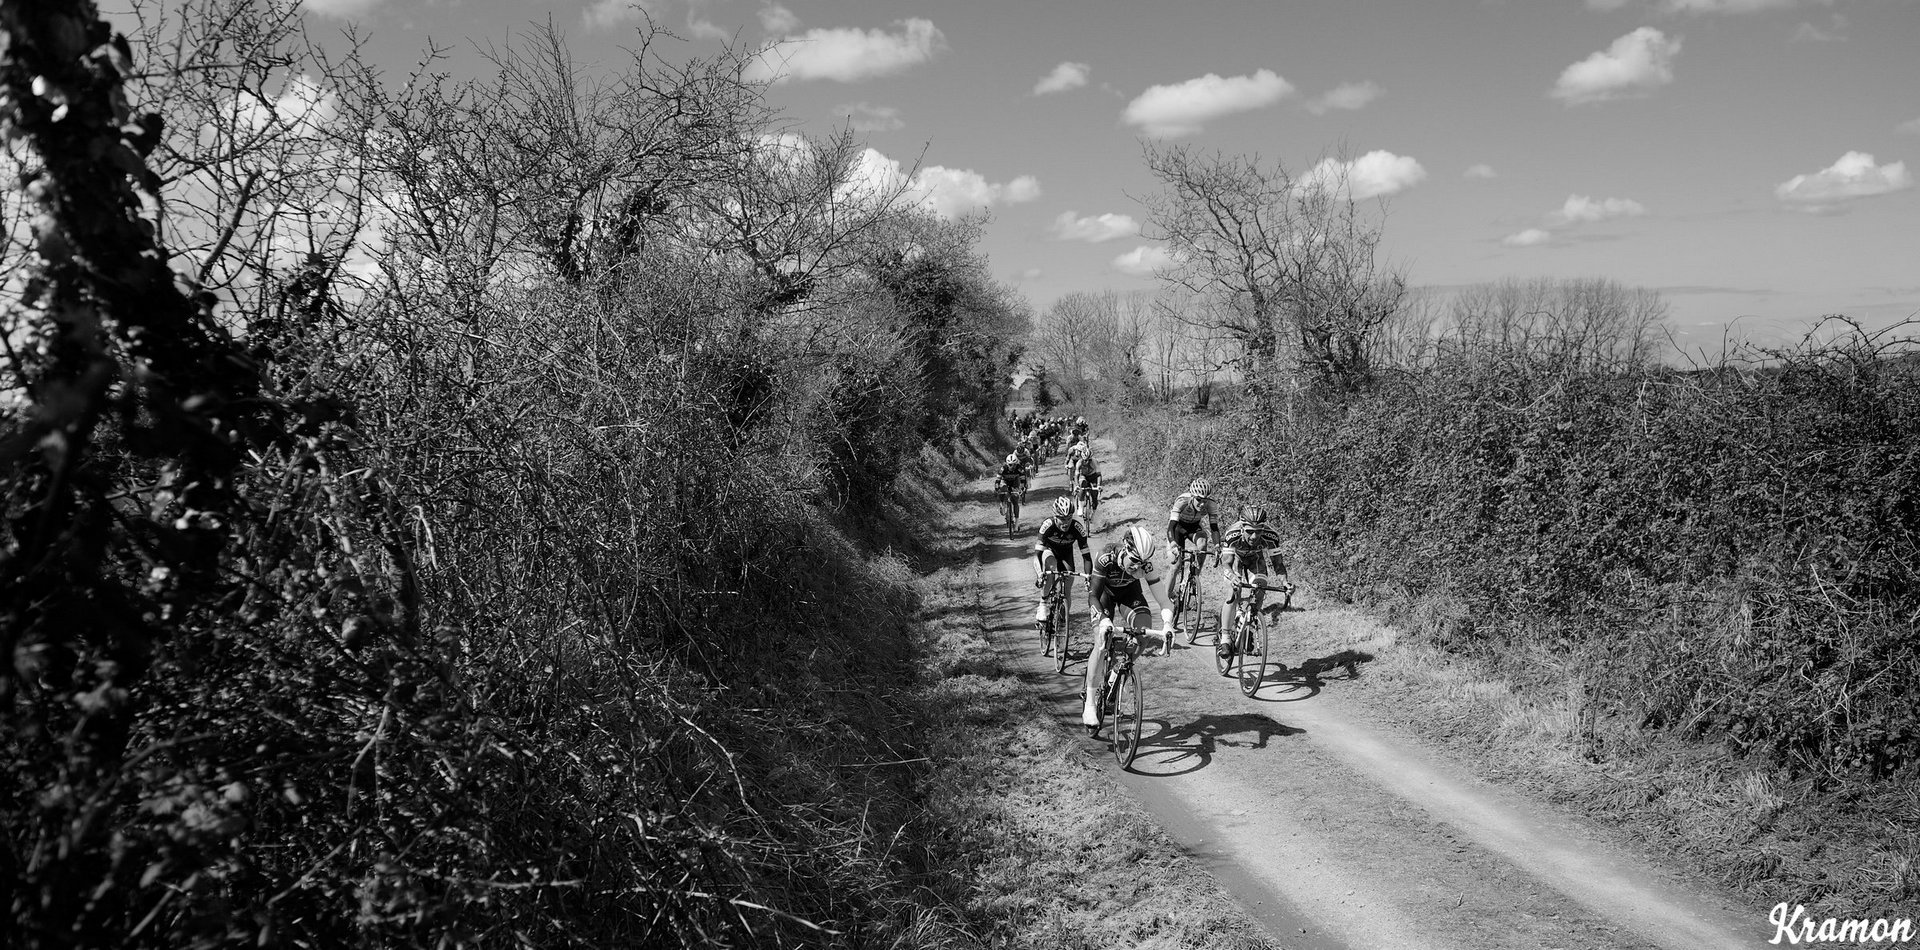 Photo Gallery Tro Bro Leon Cyclingtips